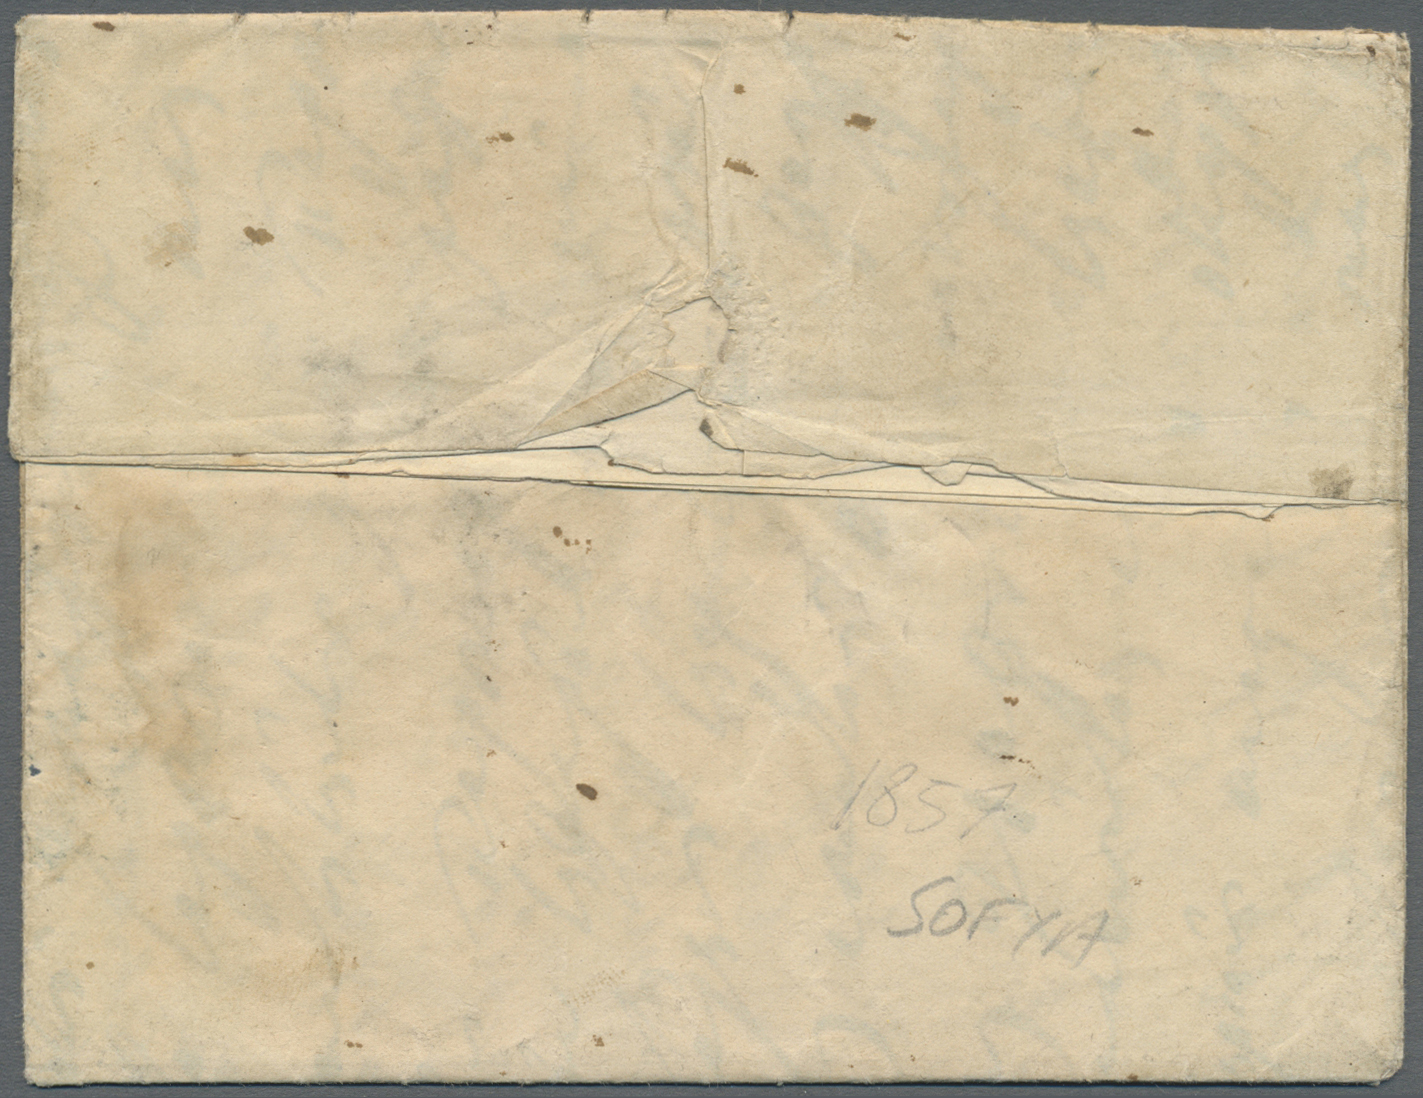 Br Bulgarien - Vorphilatelie: 1857, "AN CANIB-I POSTA-I SOFYA" On Folded Envelope With Content, Clear Prefilateli - ...-1879 Préphilatélie